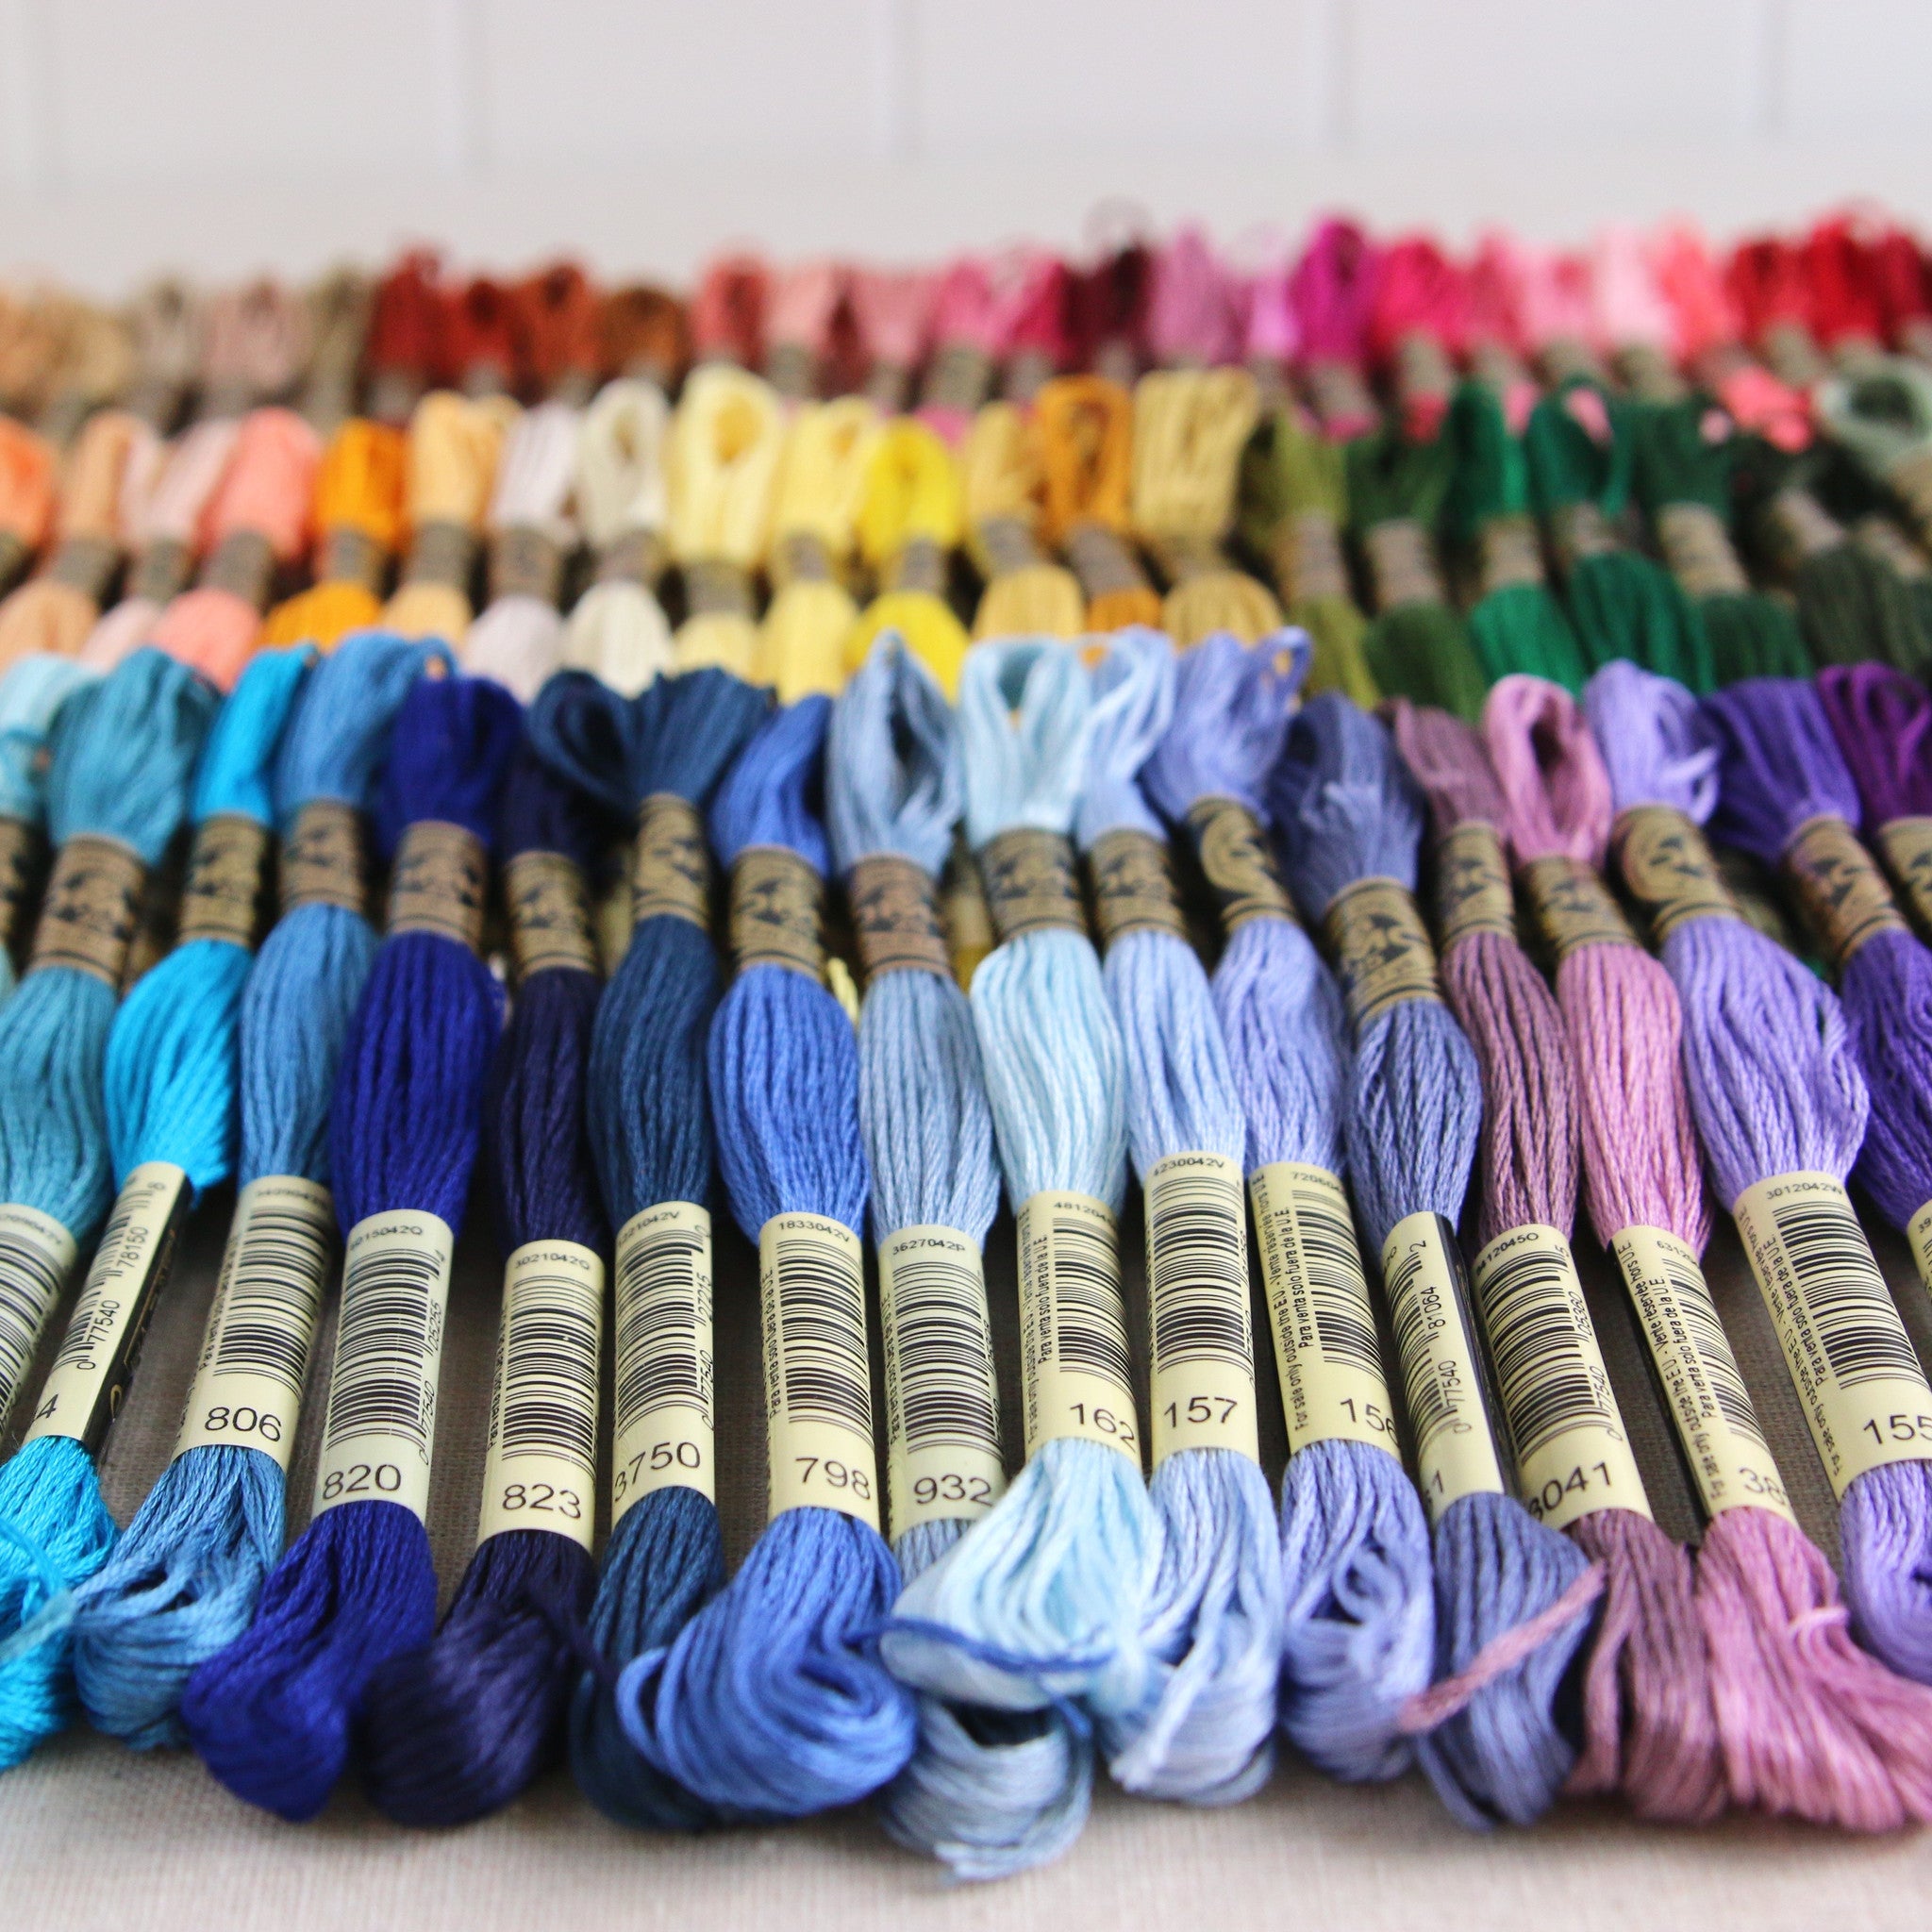 Wool-embroidery yarn DMC, brown colors